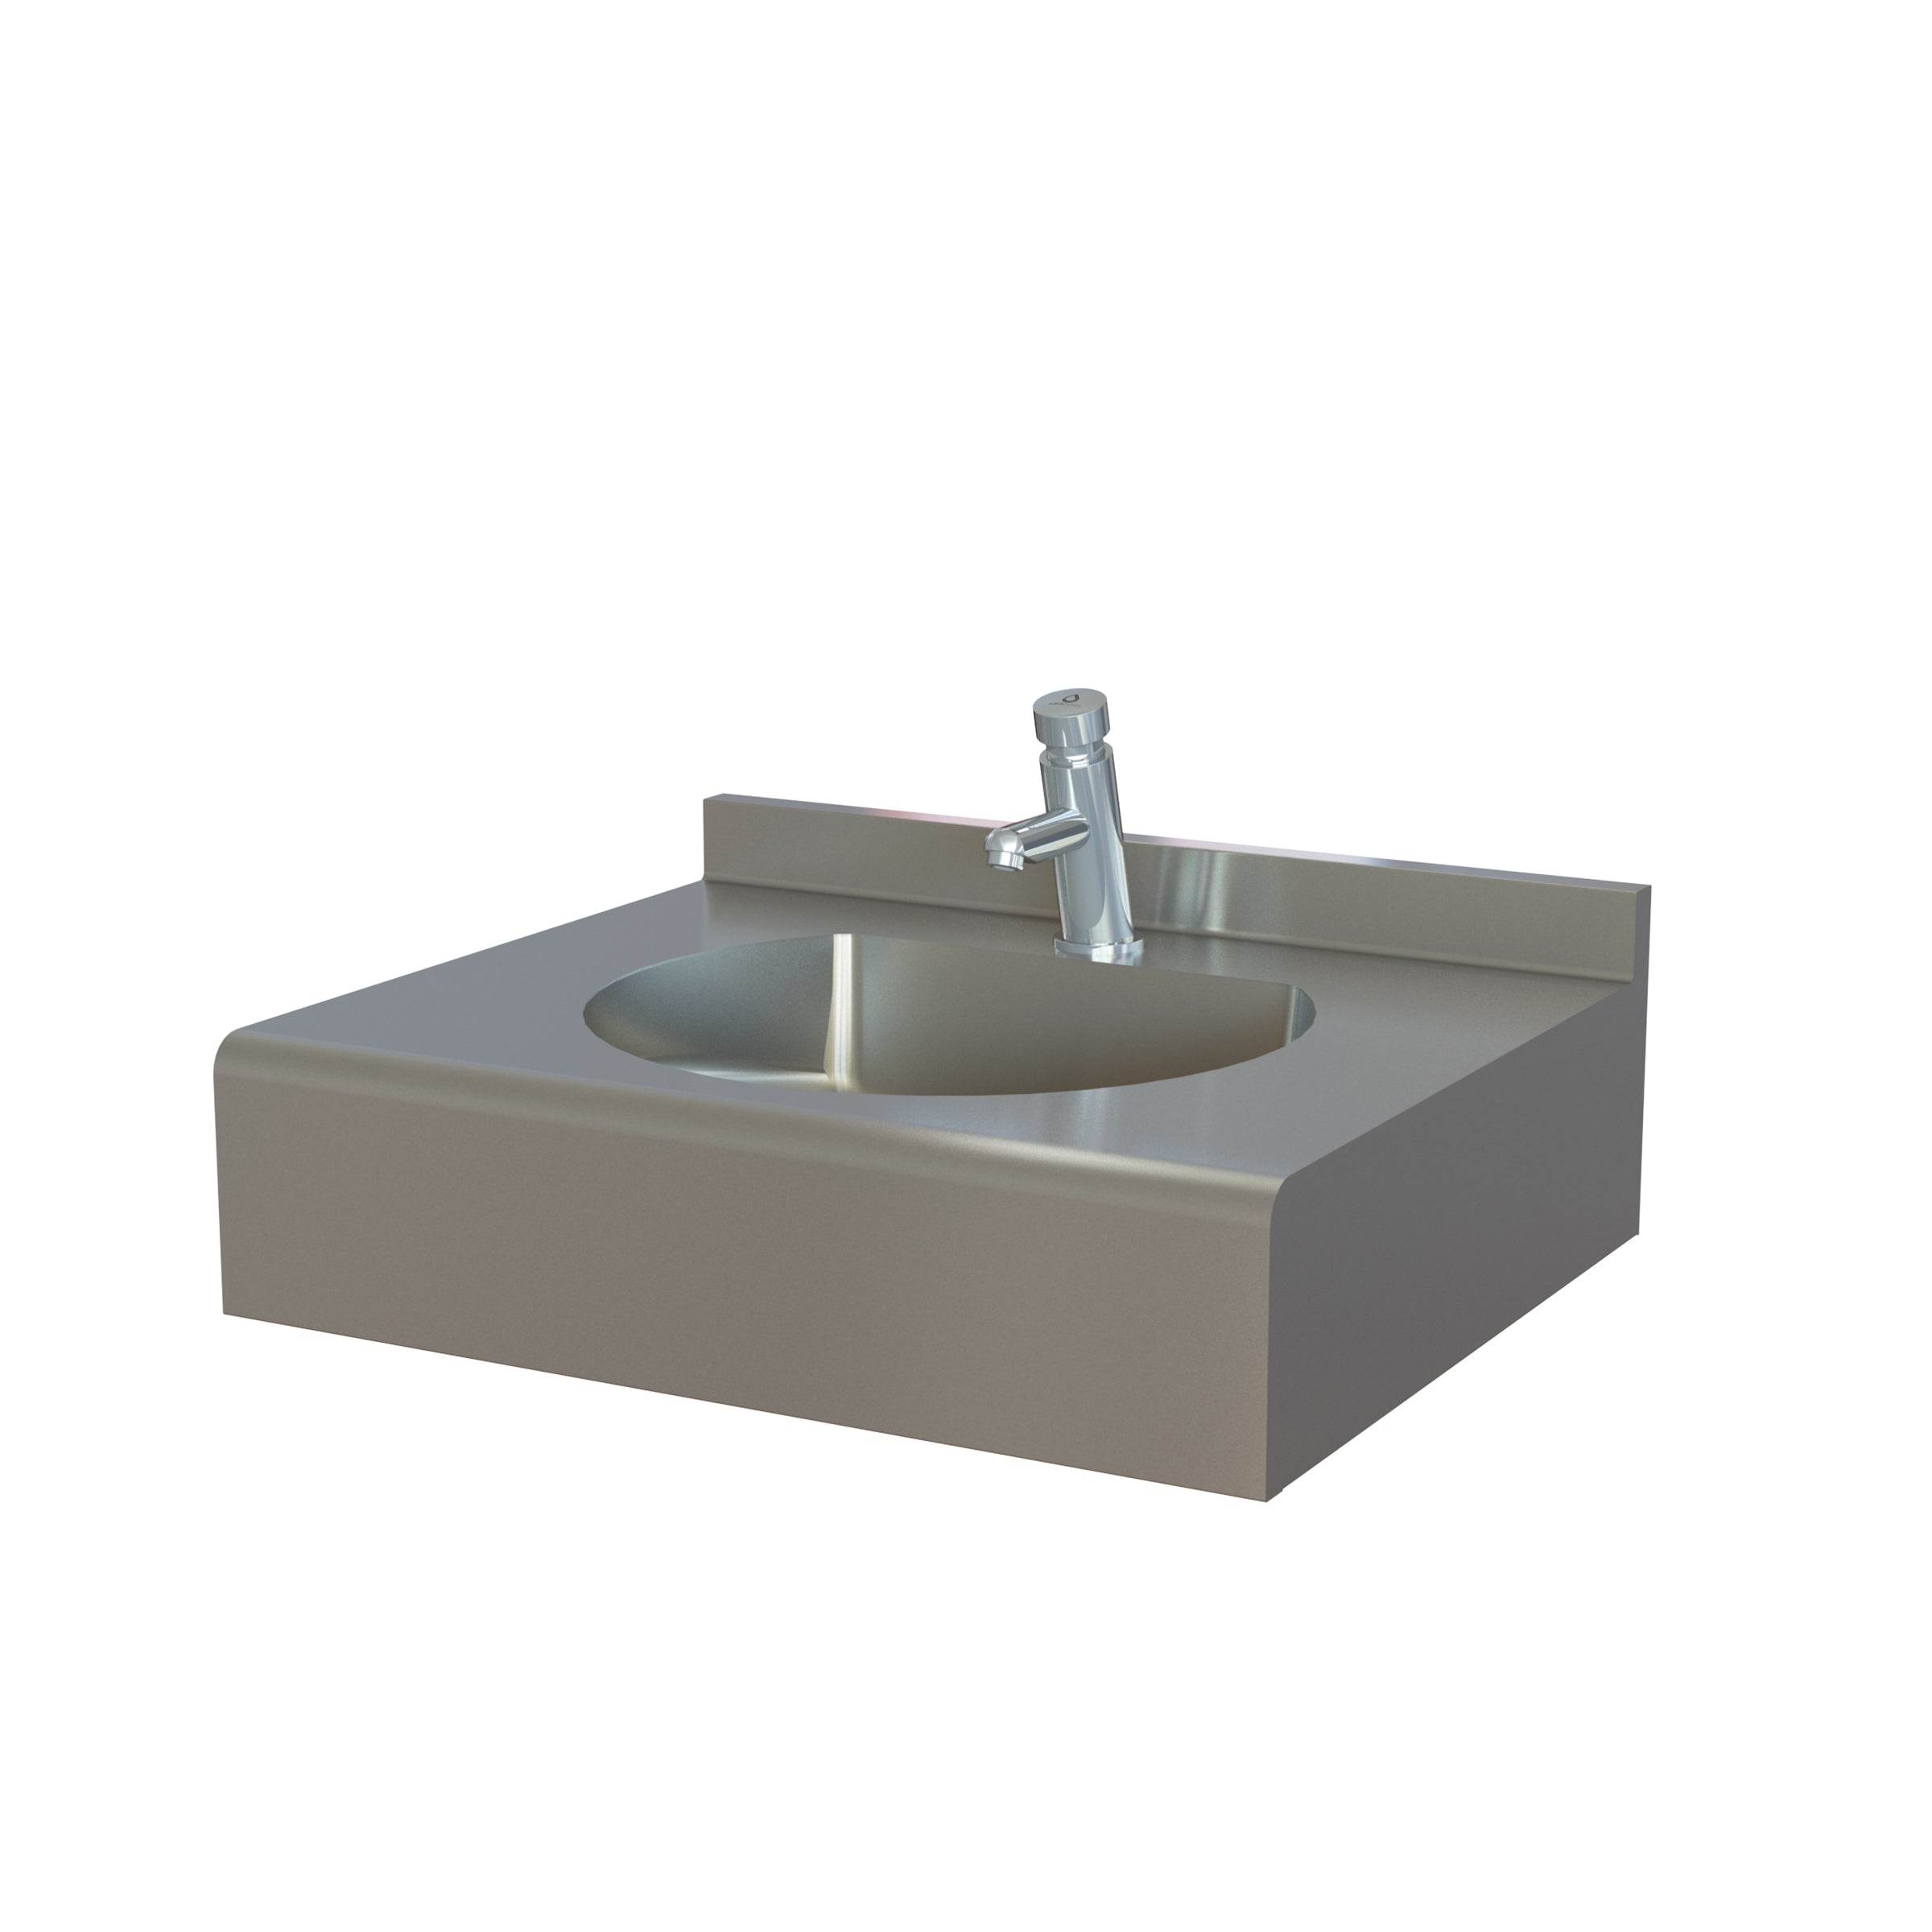 LAV9C0600 - Multiset Single User Stainless Steel Hand Wash Station Sink